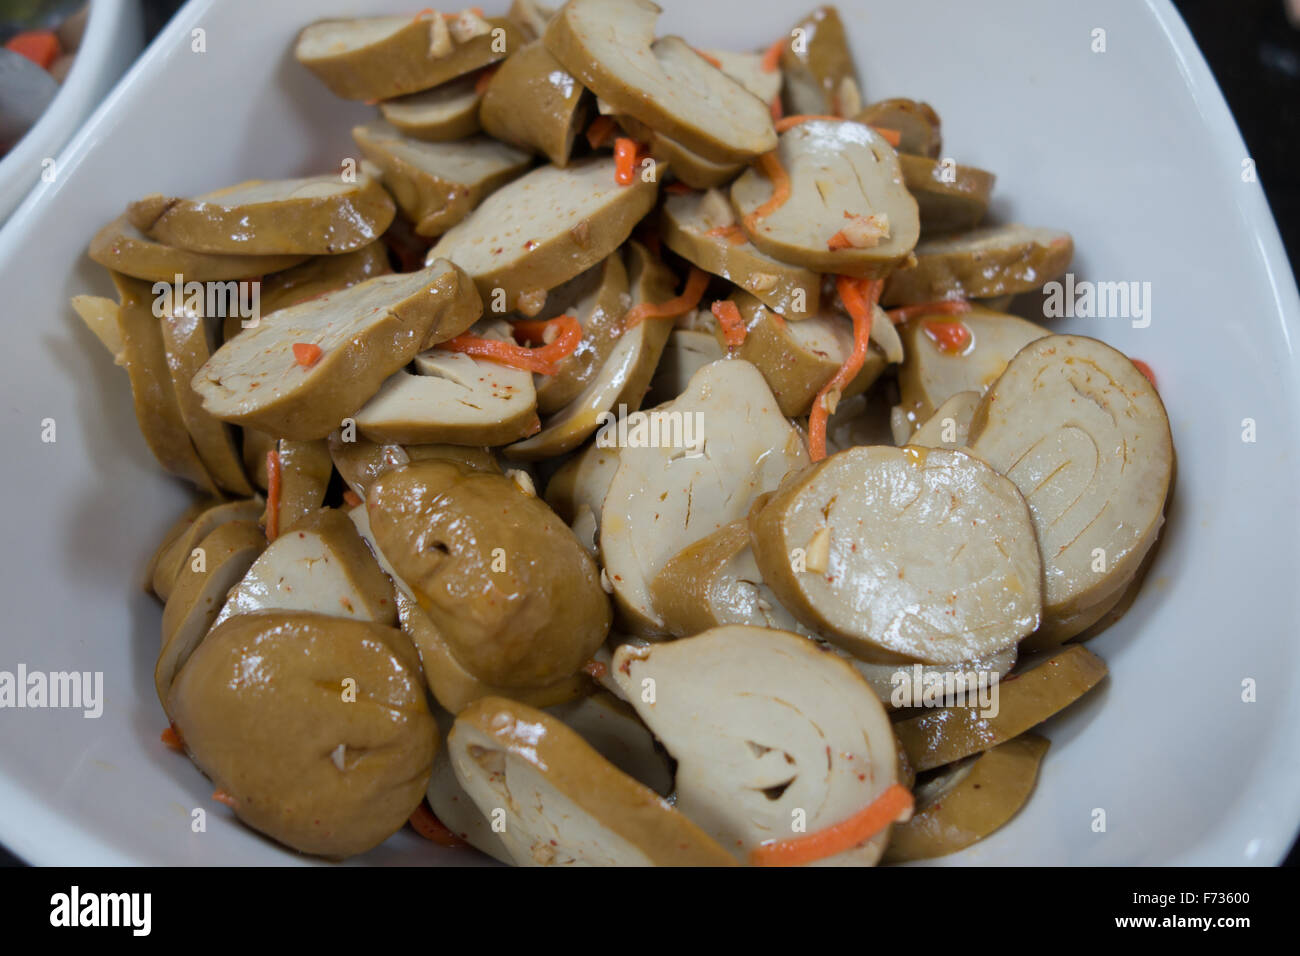 appetizer bean curd taiwan Stock Photo